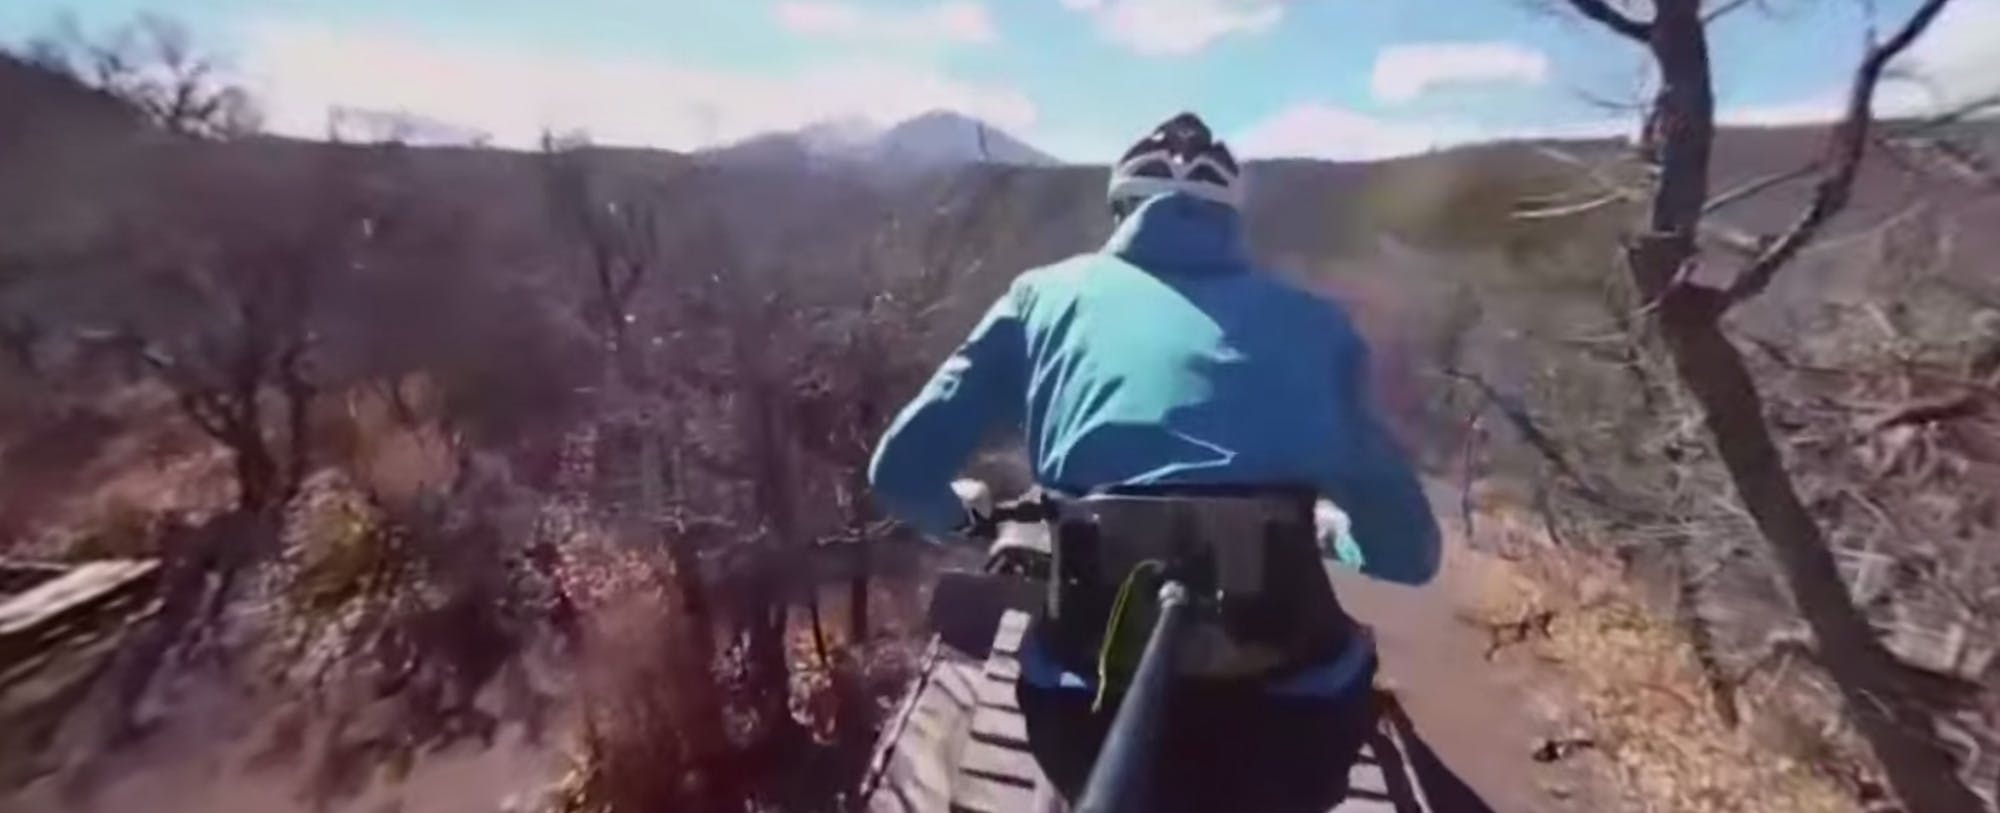 Twisting, Turning and Soaring: Mountain Biking Colorado's Prince Creek Trails